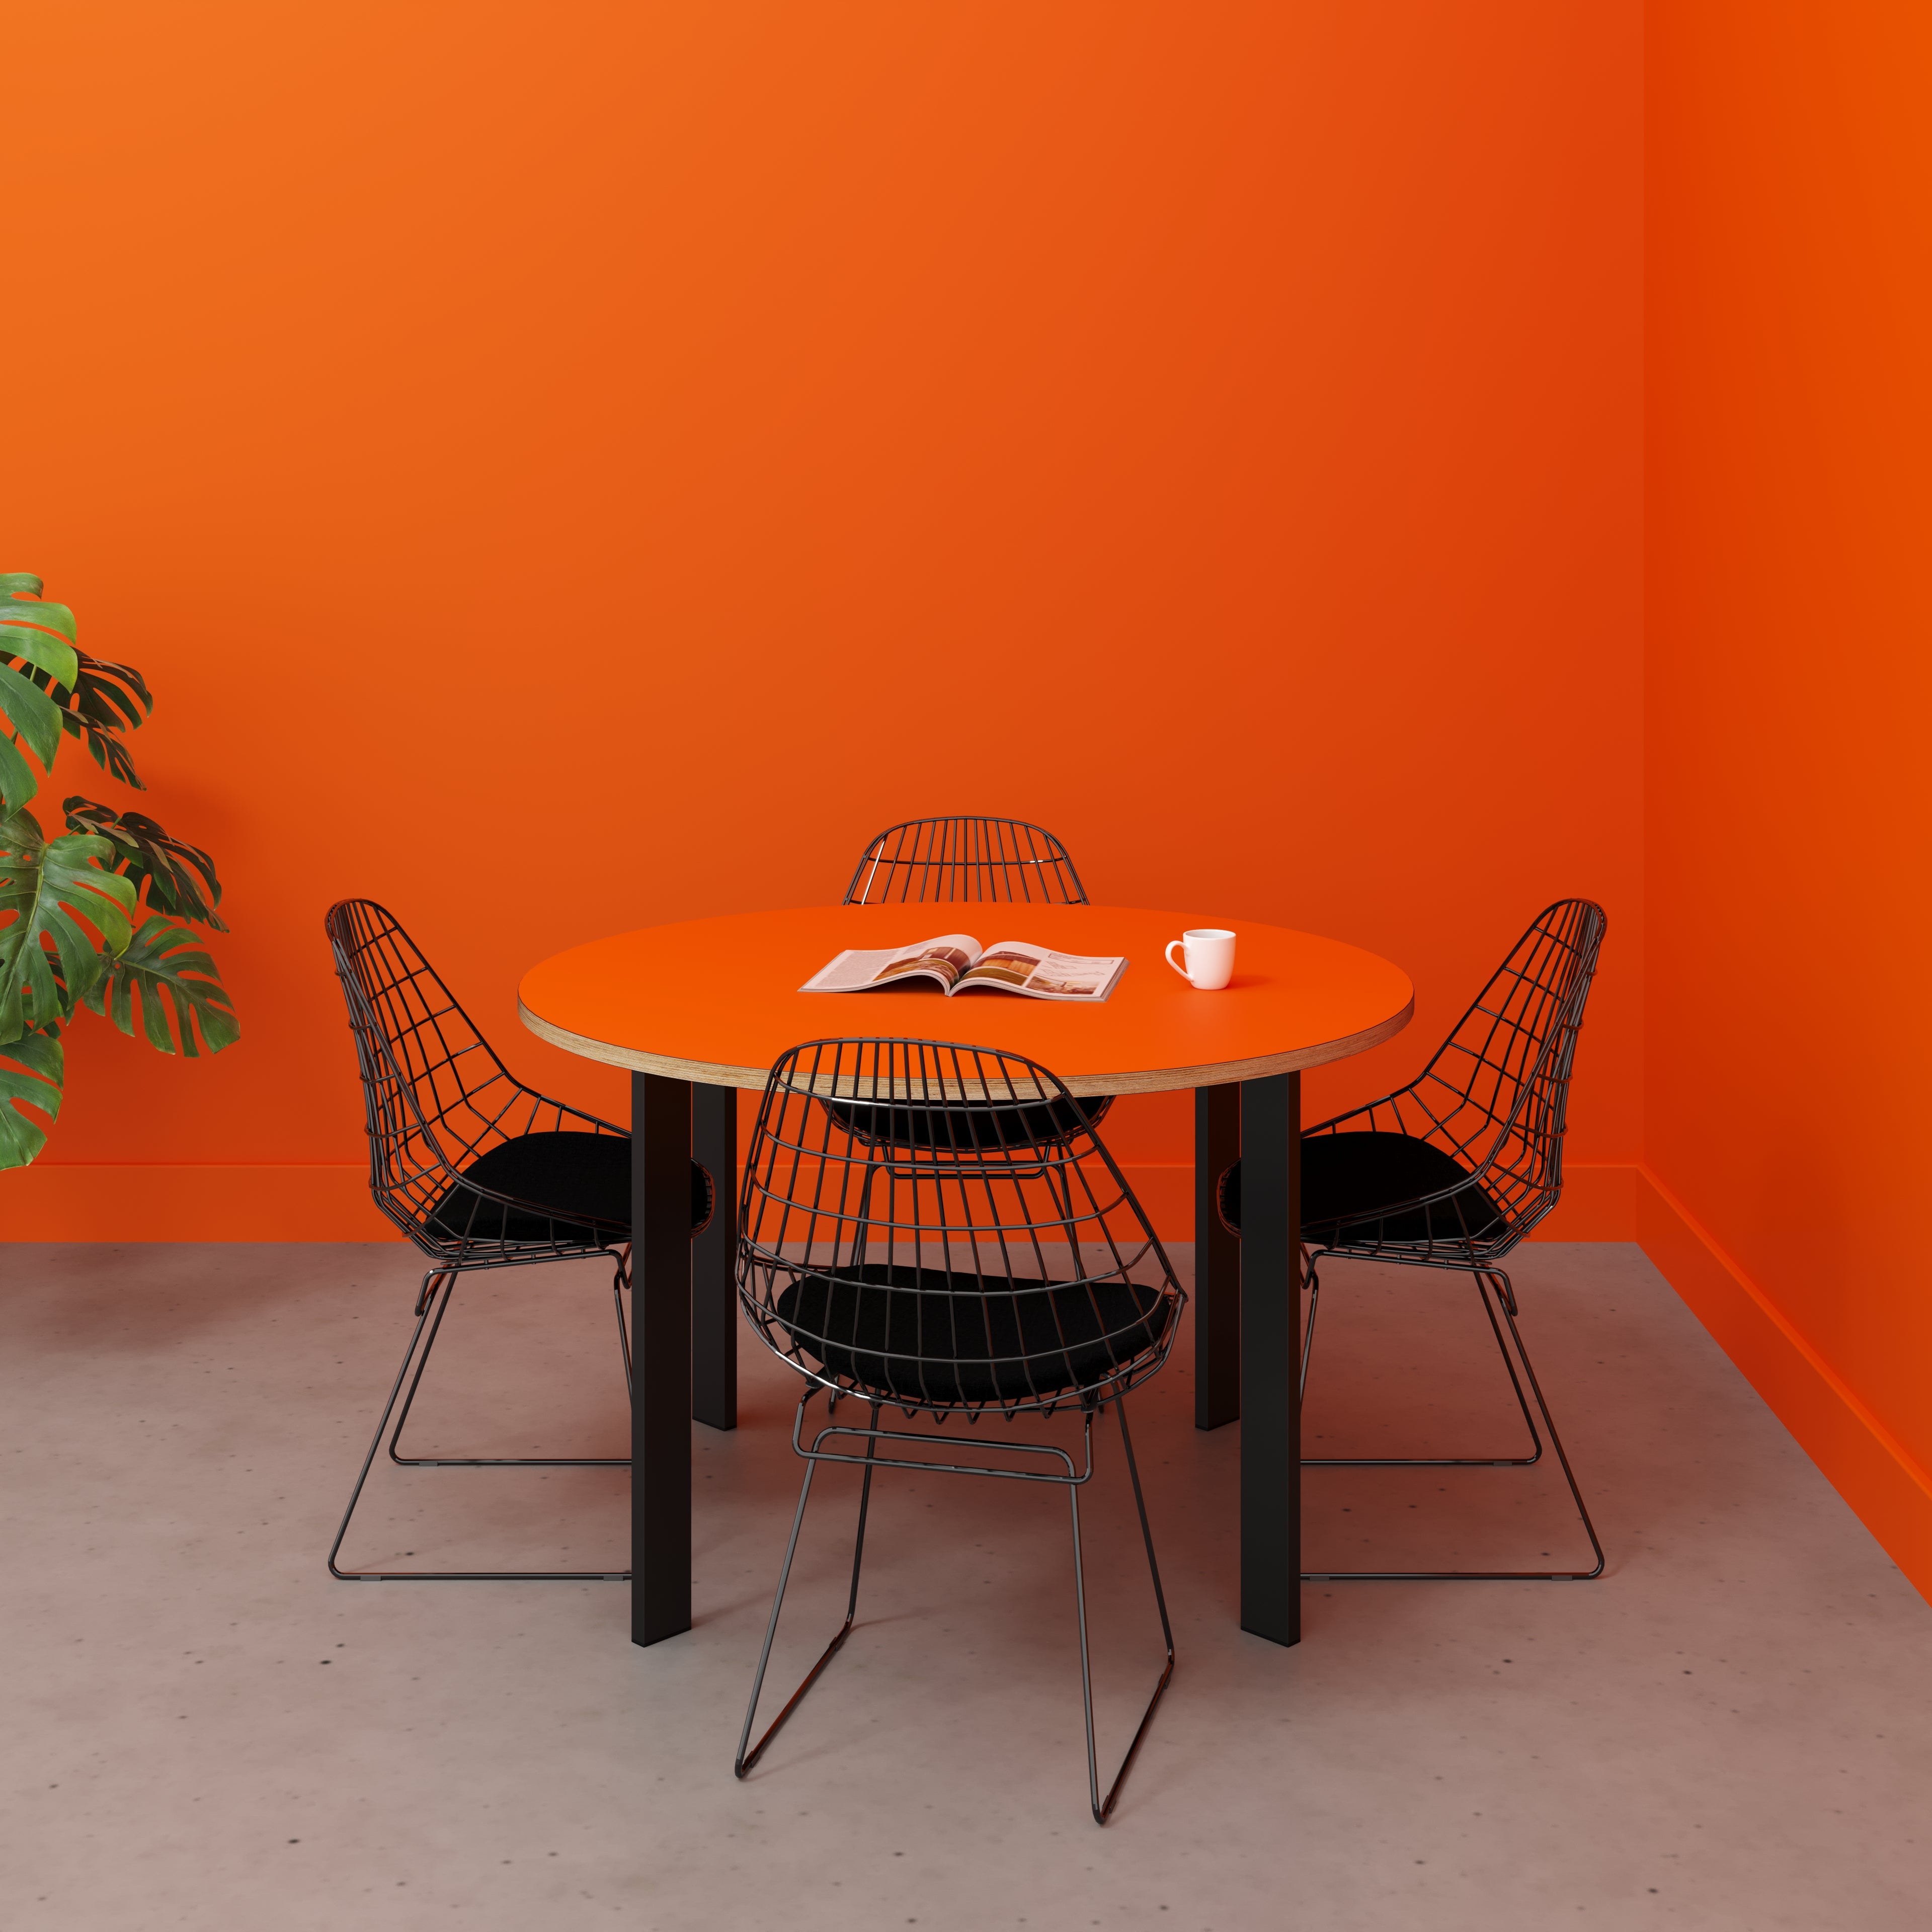 Round Table with Black Rectangular Single Pin Legs - Formica Levante Orange - 1200(dia) x 750(h)